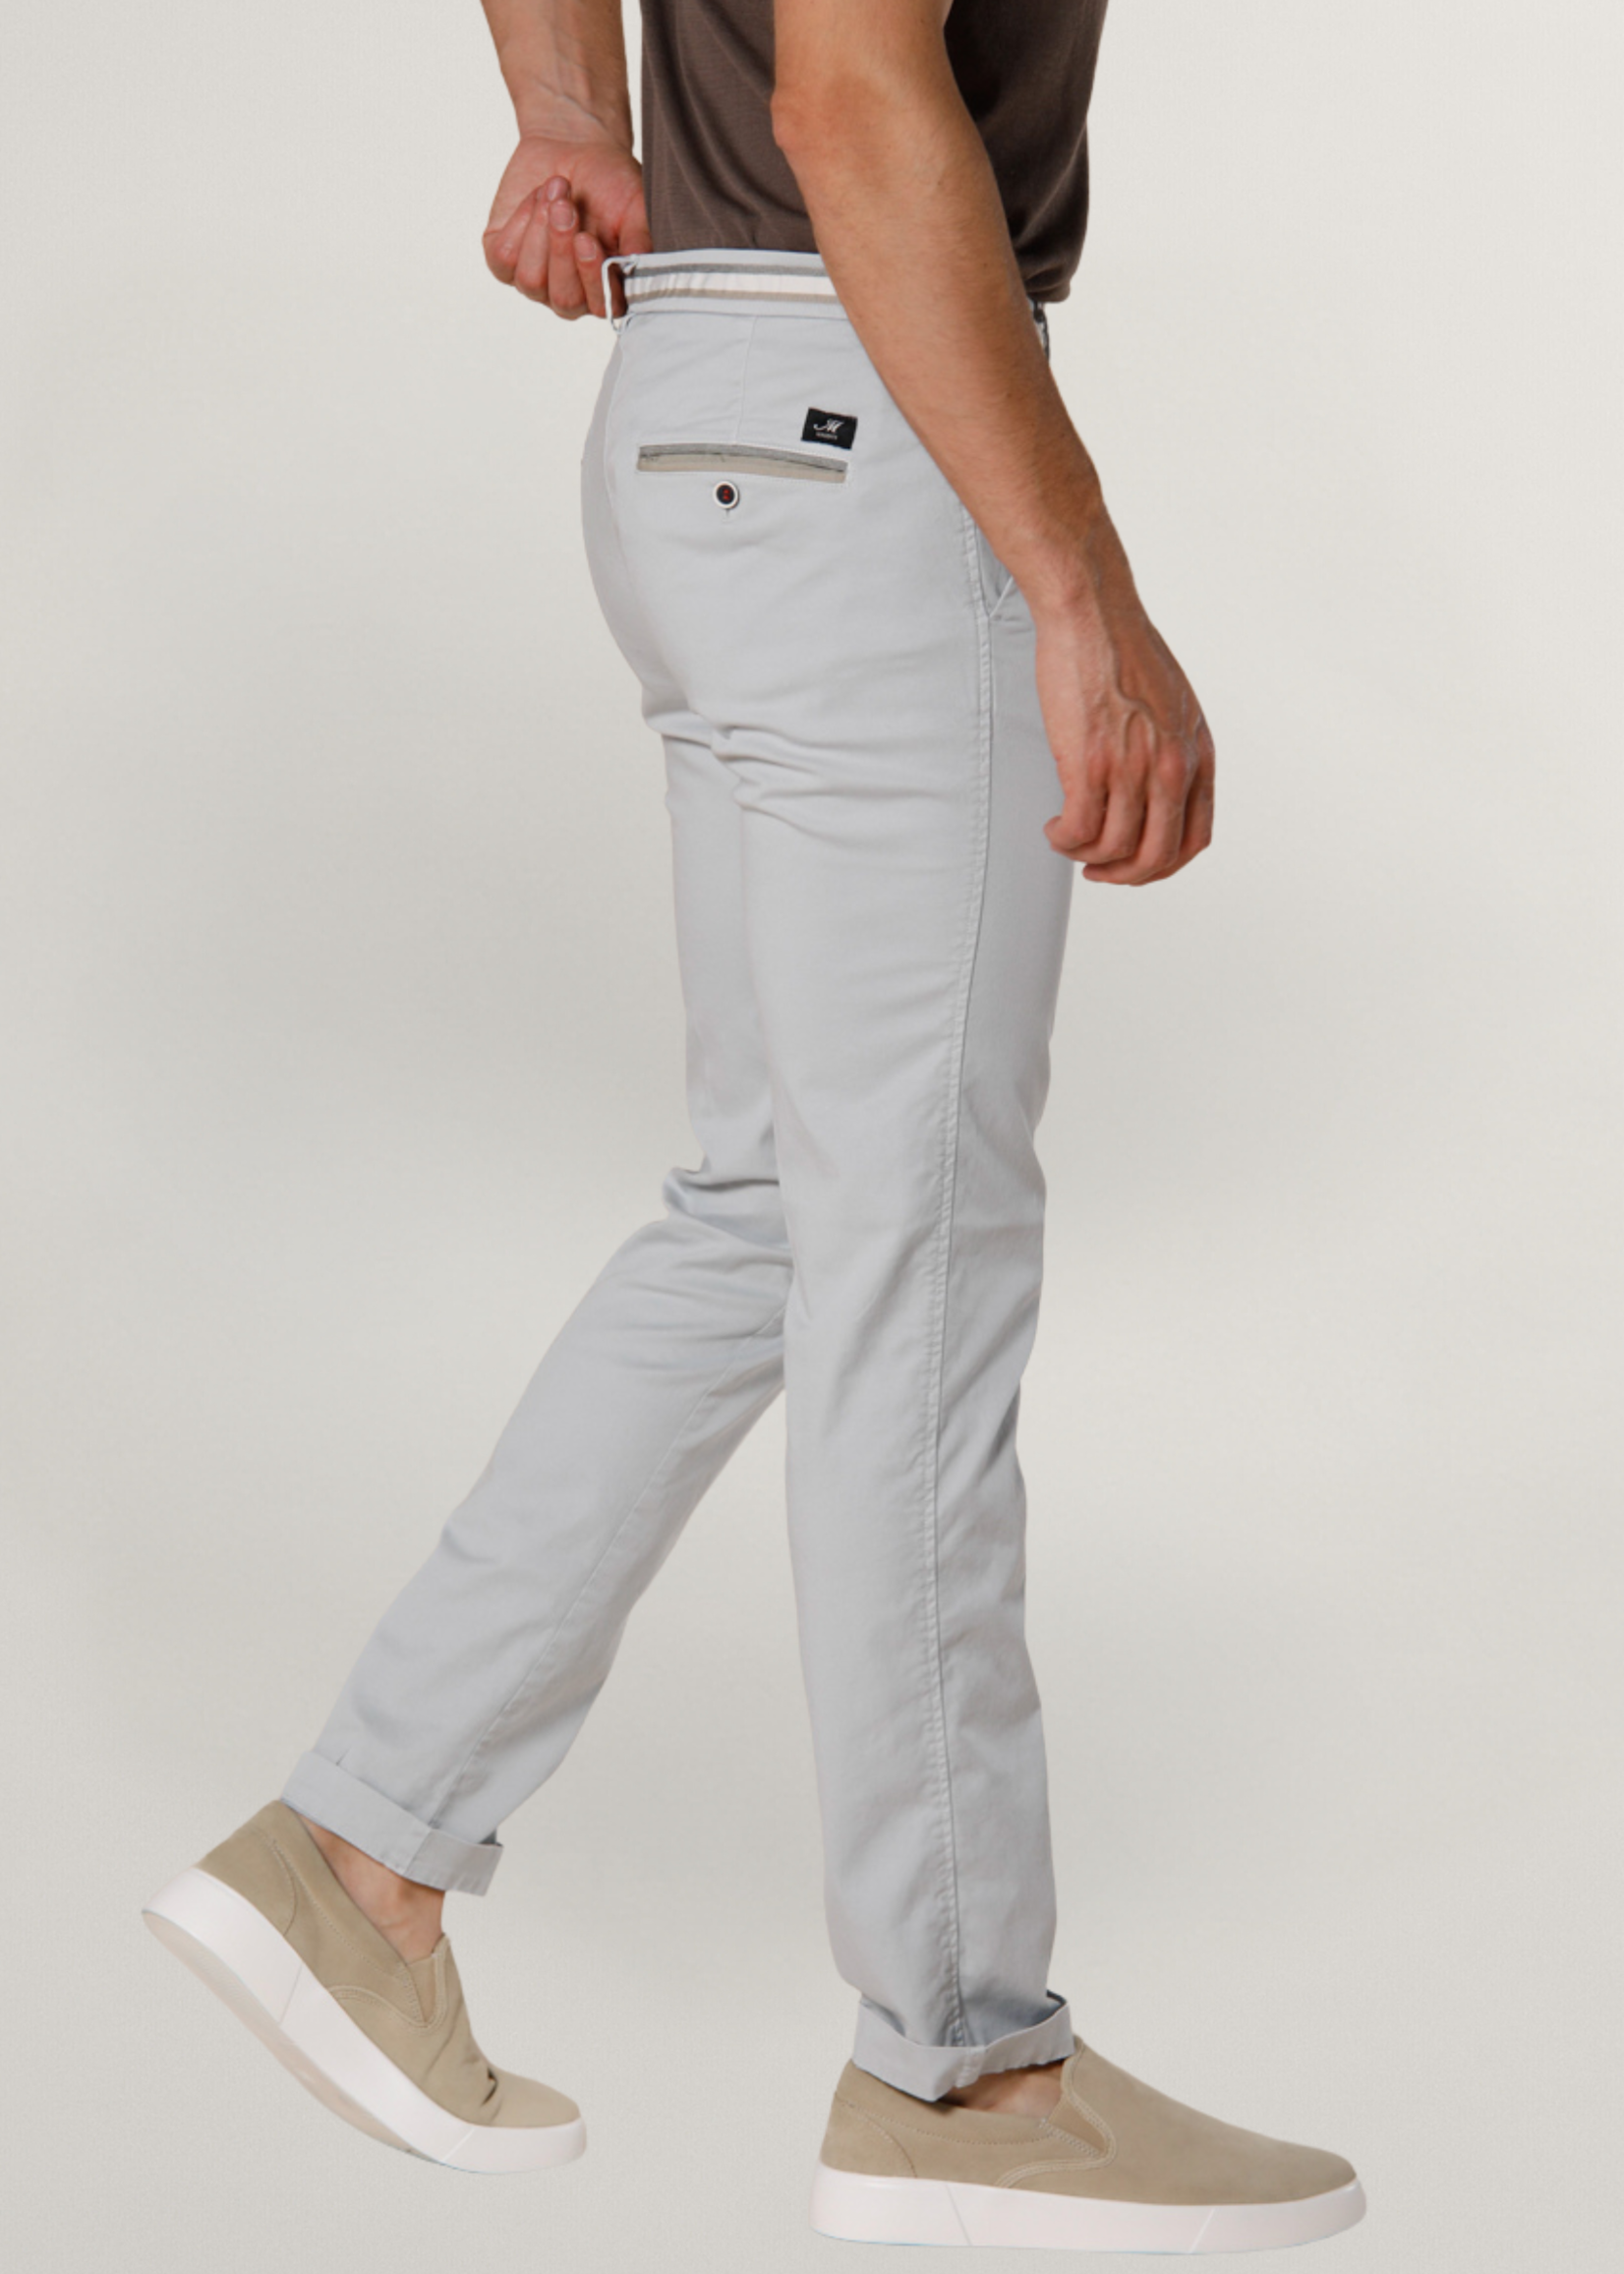 MASON'S Torino Summer pantalon chino homme en coton et tencel avec rubans slim - Gris clair